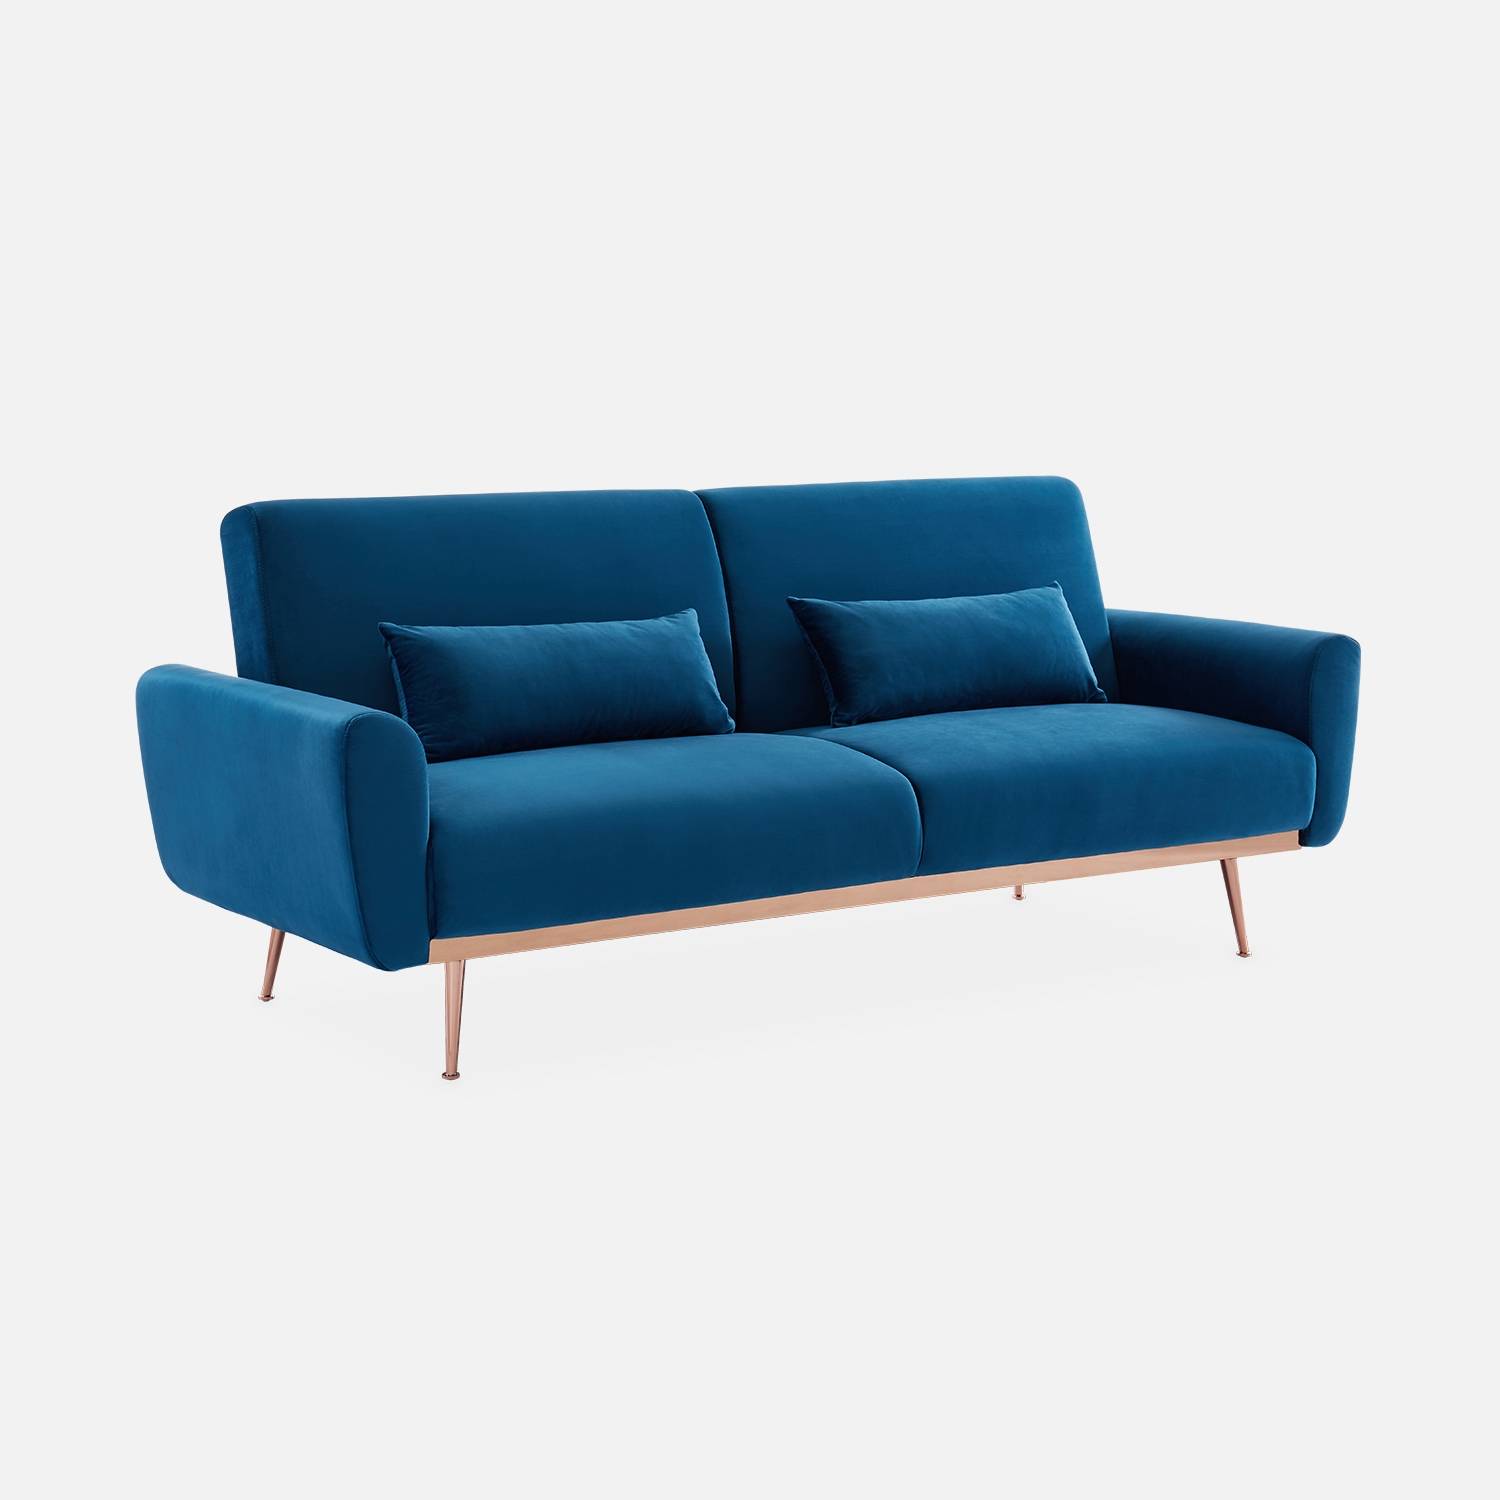 3-seater convertible sofa bed, petro blue | sweeek